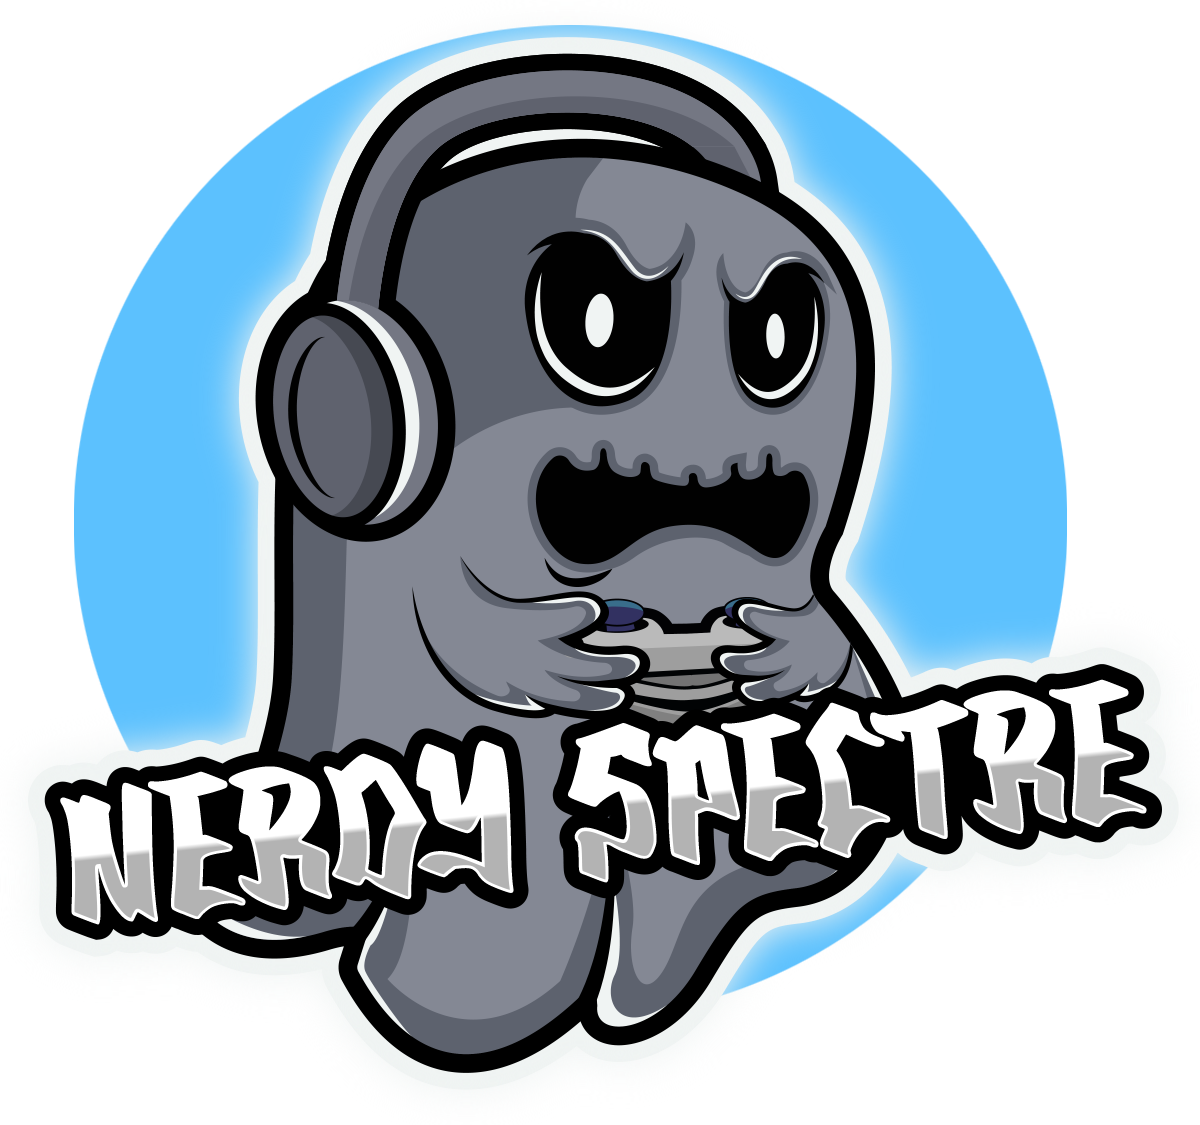 Nerdy Spectre Gaming